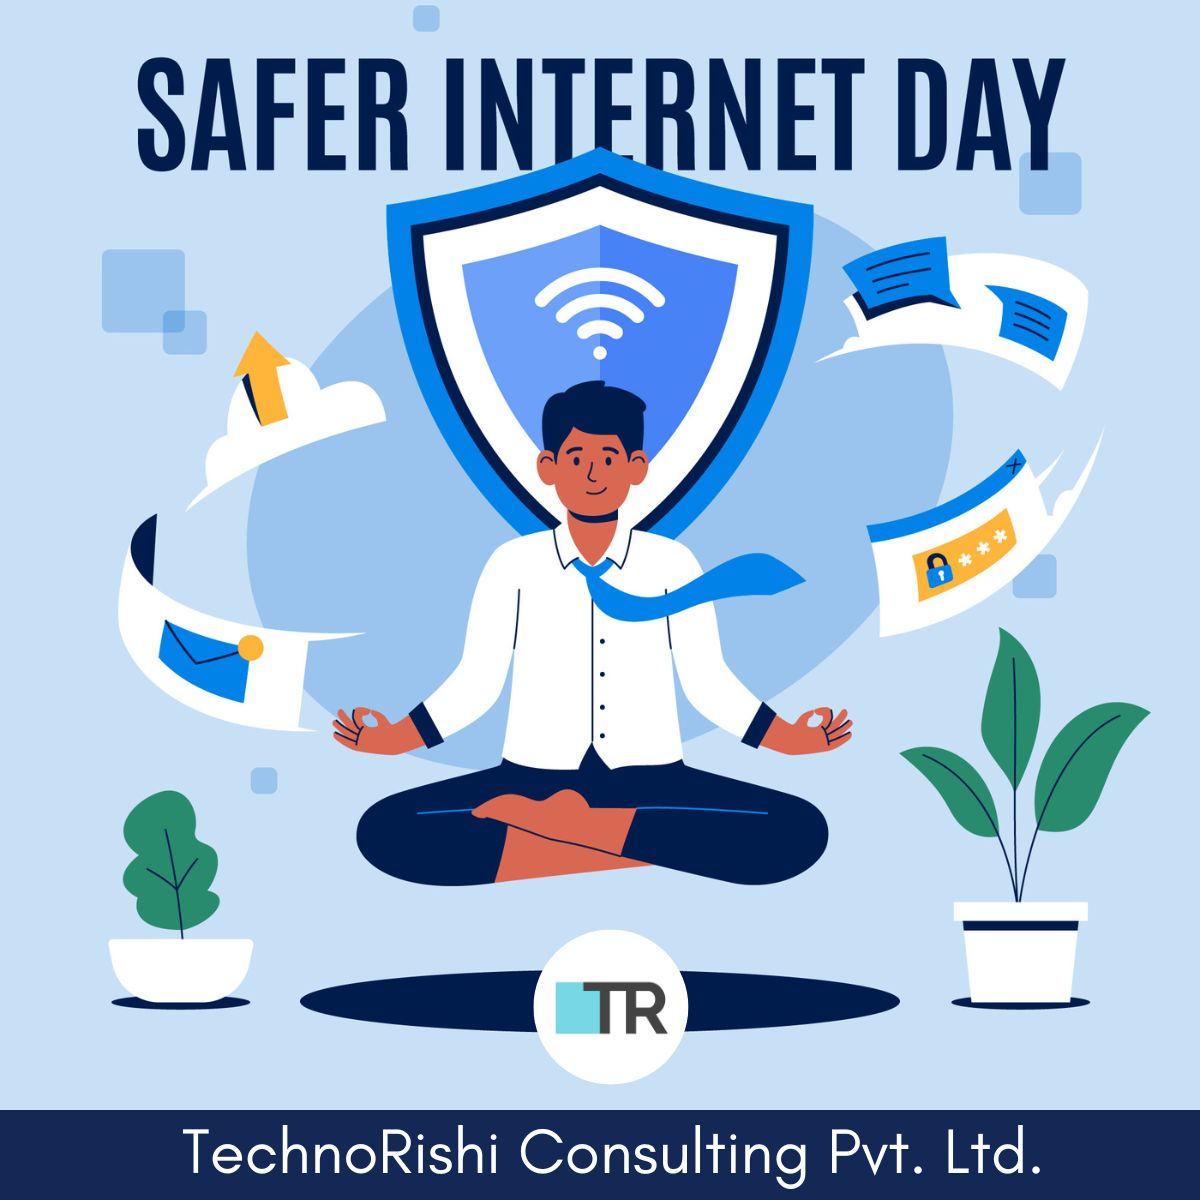 🌐 Celebrating Safer Internet Day! 
Promote online safety, foster positive digital experiences, and create a secure online space.

#internet #saferinternet #awarenessmatters #phising #alert #spam #technorishiconsulting #technorishi